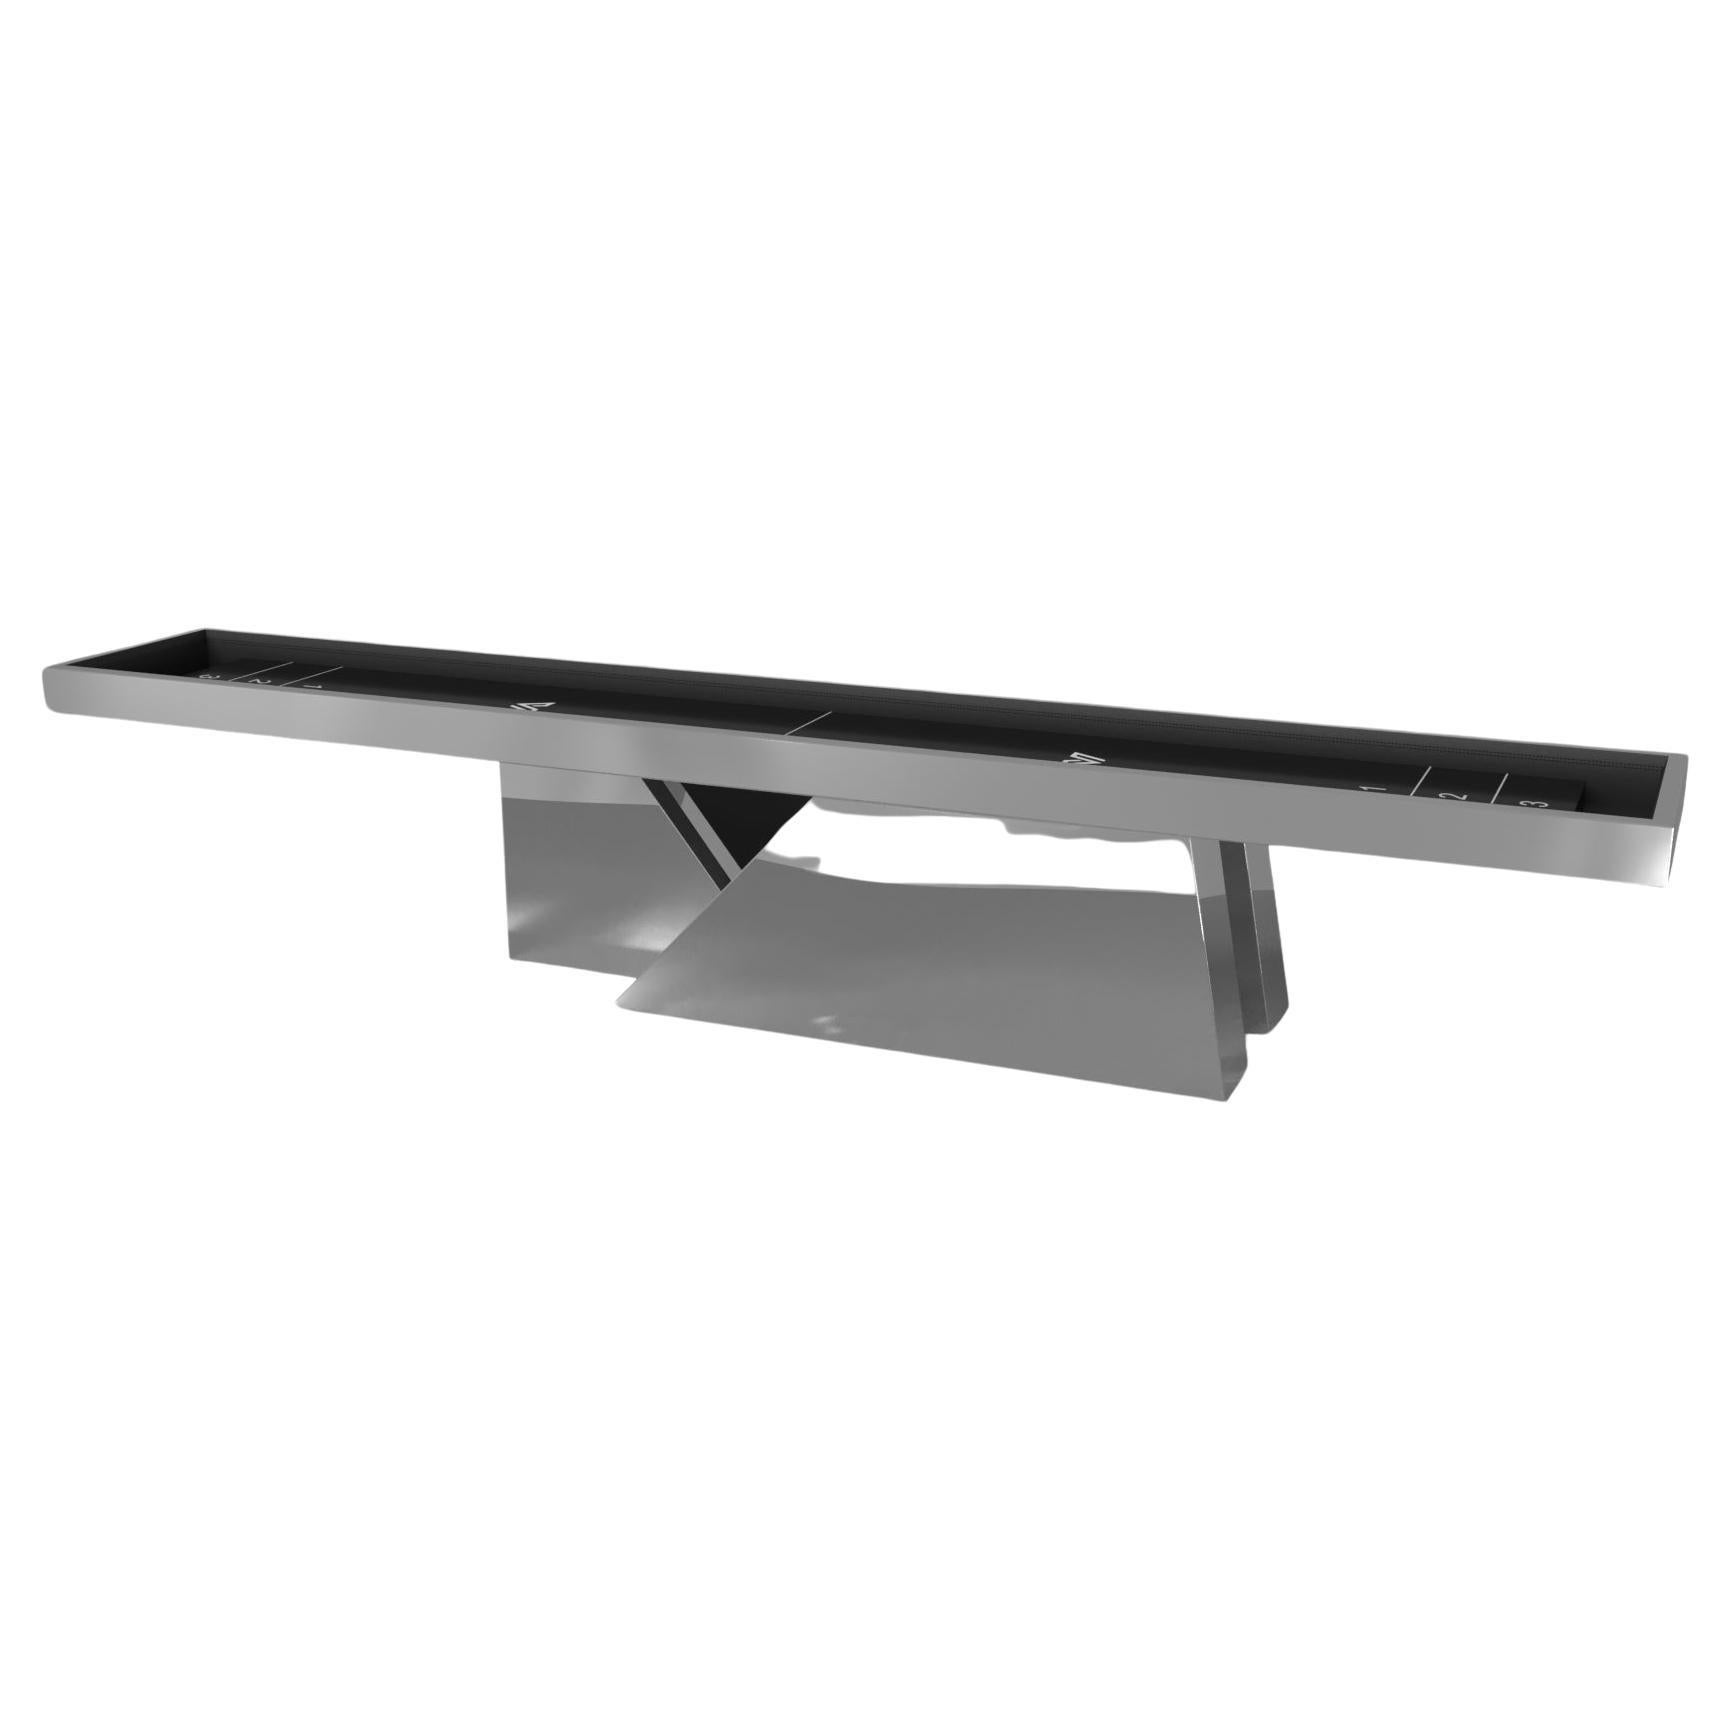 Elevate Customs Stilt Shuffleboard Table/Stainless Steel Sheet Metal in 22' -USA